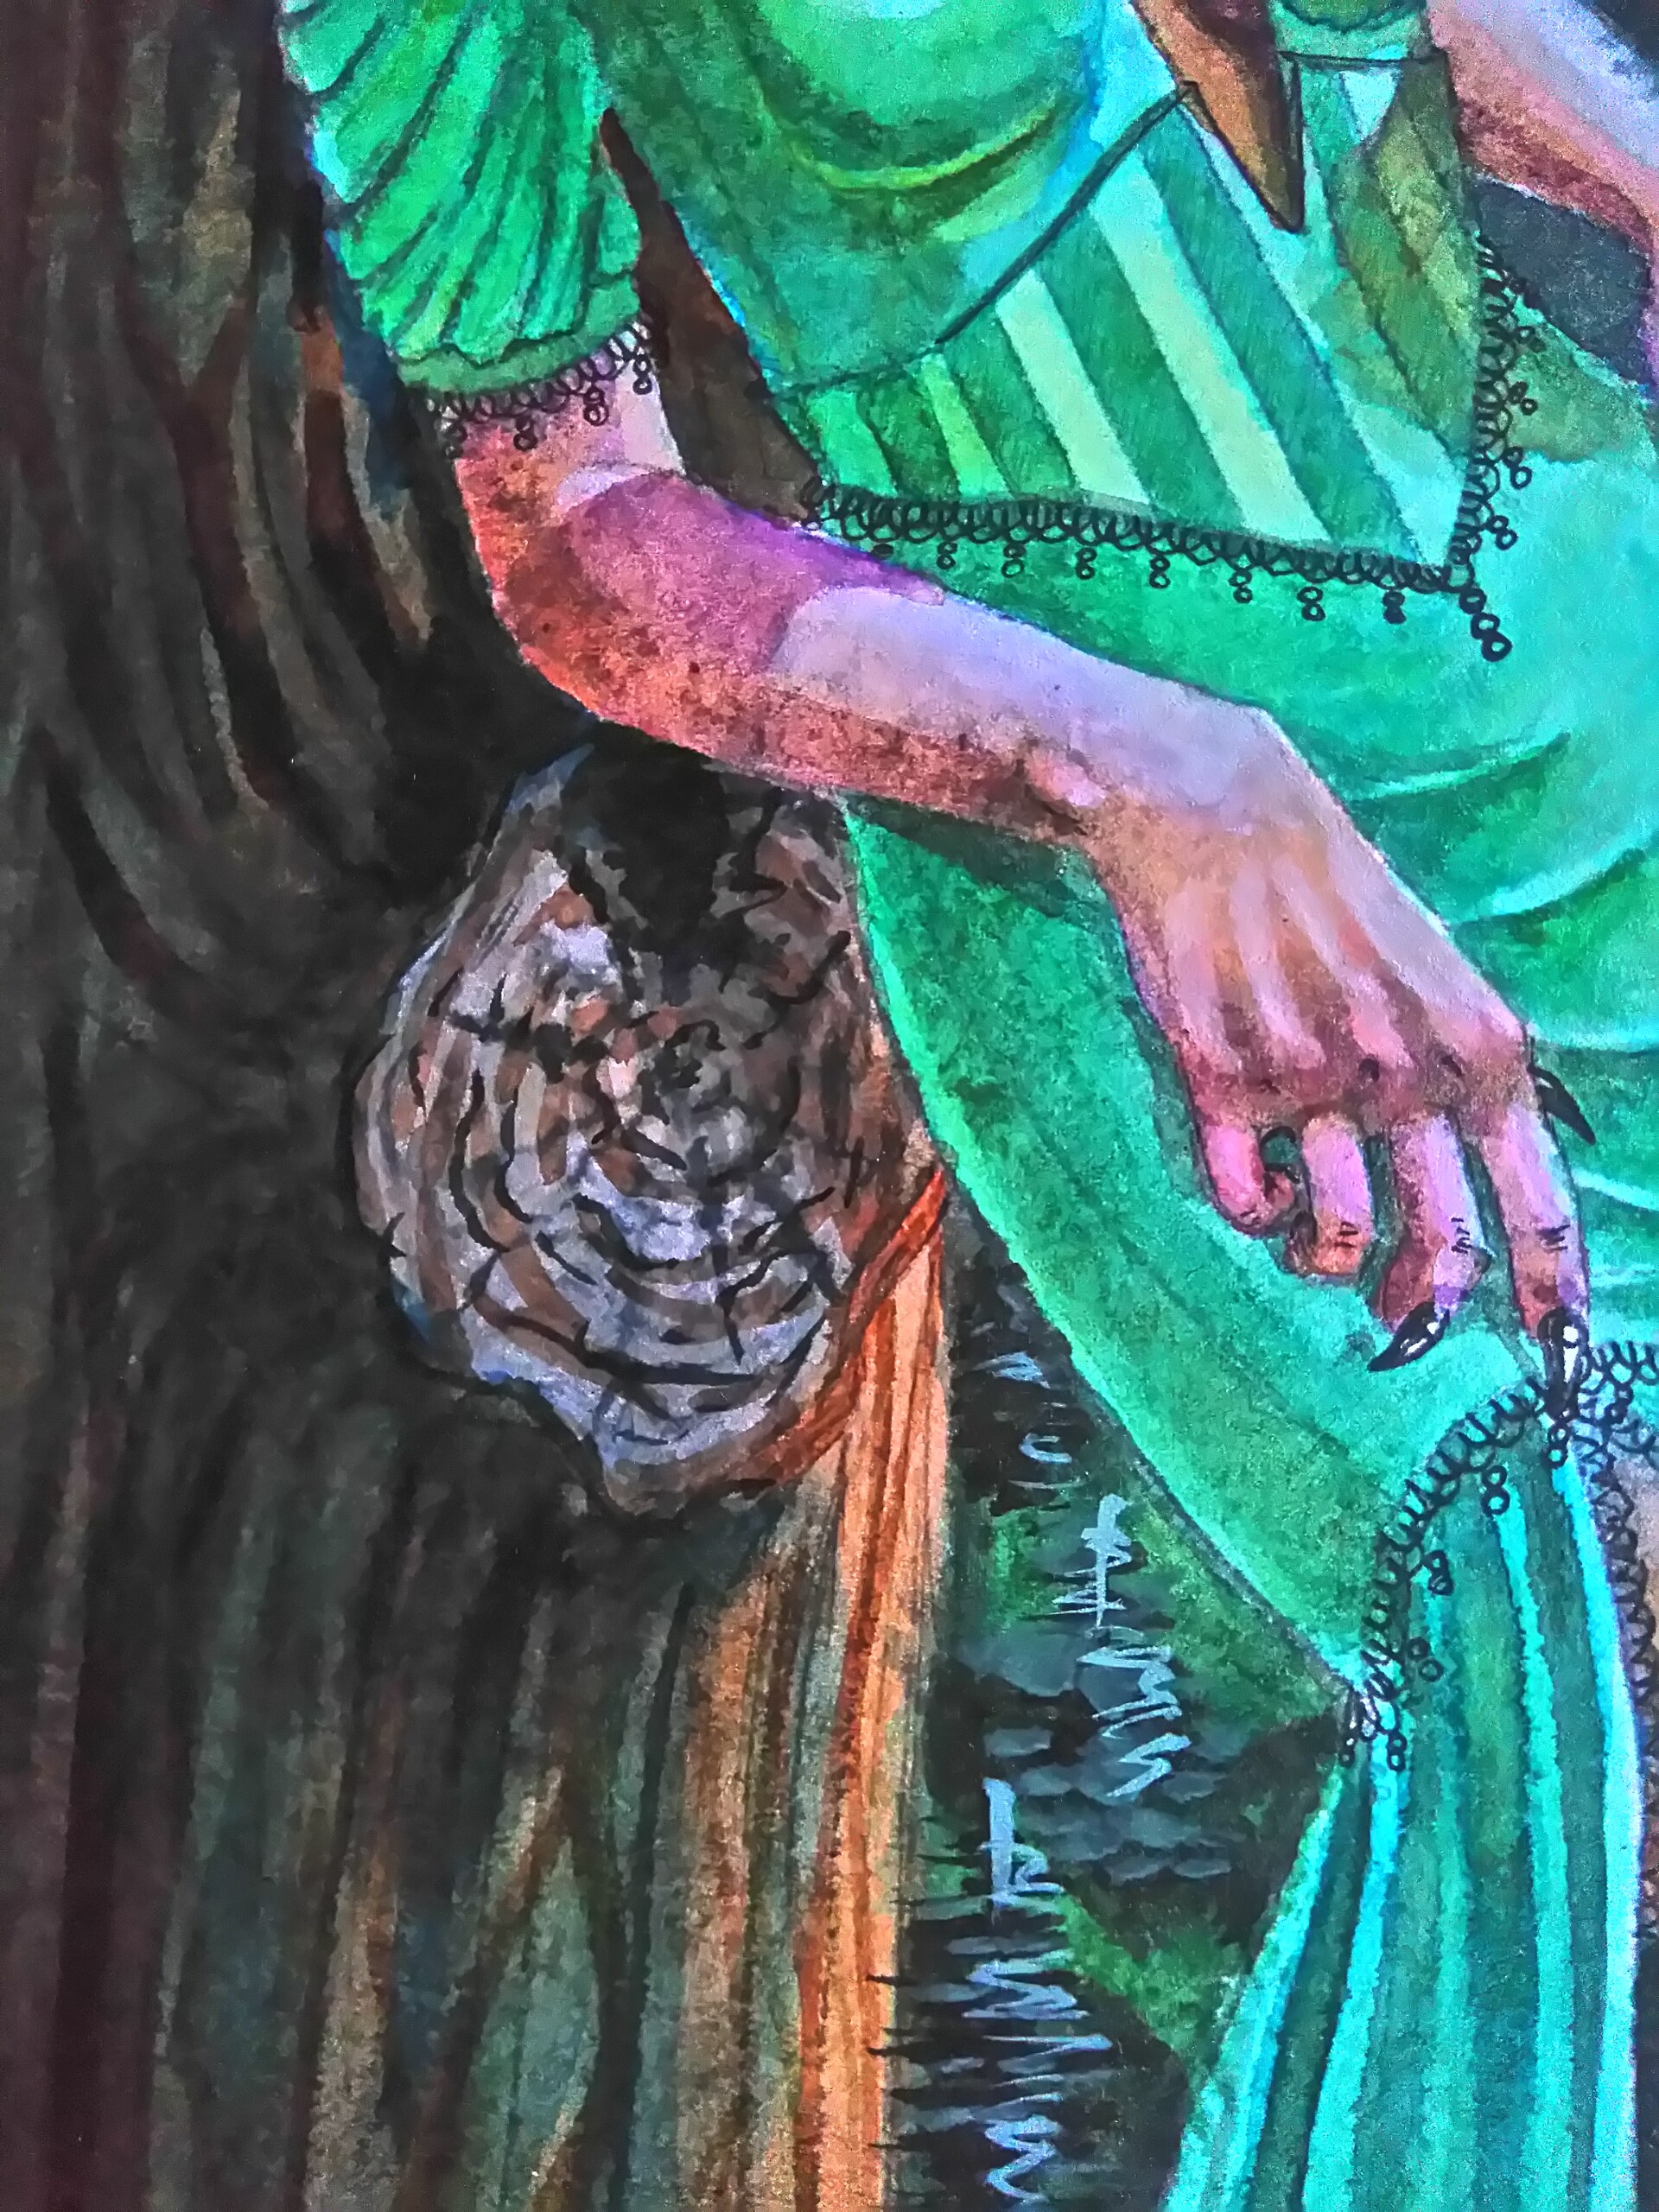 My Goddess in Acrylic on 4x6 canvas by WickedSyn82 on DeviantArt